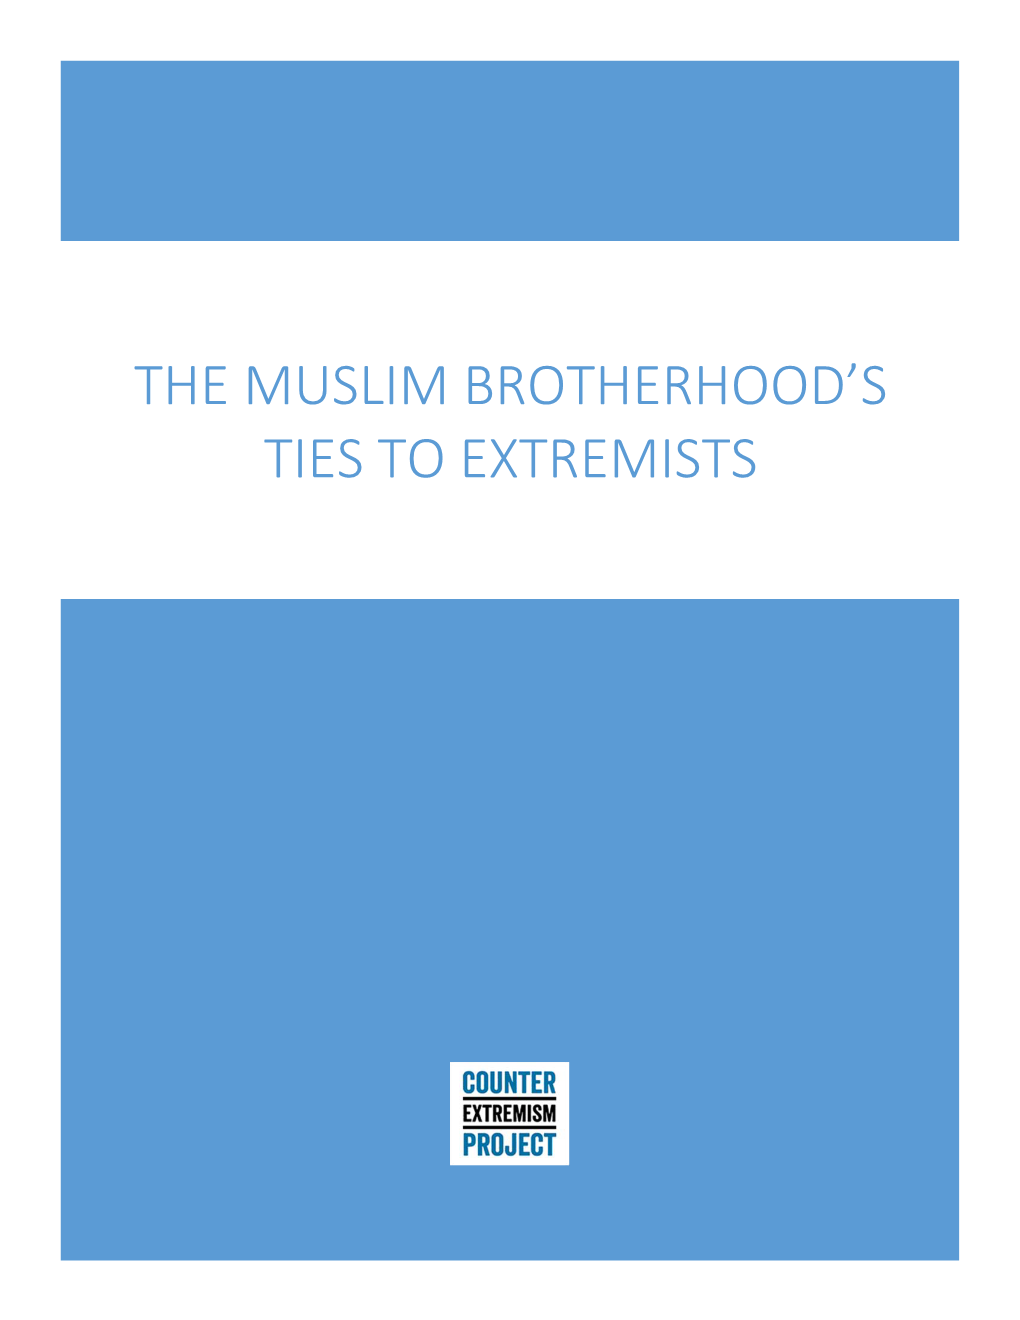 The Muslim Brotherhood's Ties to Extremists